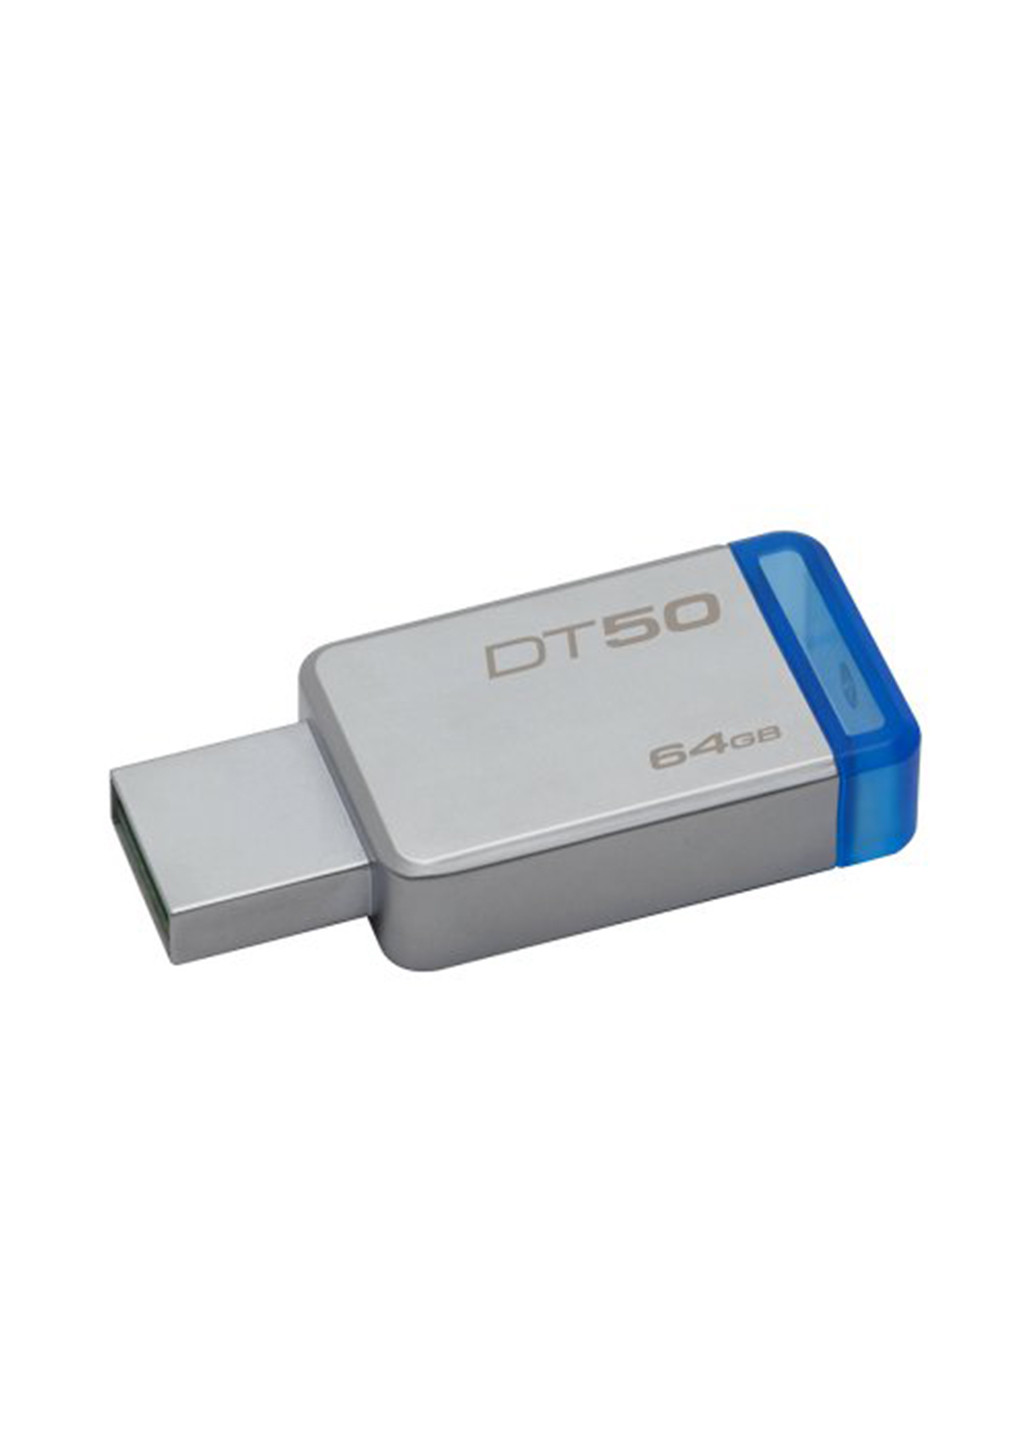 Флеш пам'ять USB DataTraveler 50 64GB Blue (DT50 / 64GB) Kingston флеш память usb kingston datatraveler 50 64gb blue (dt50/64gb) (139256221)